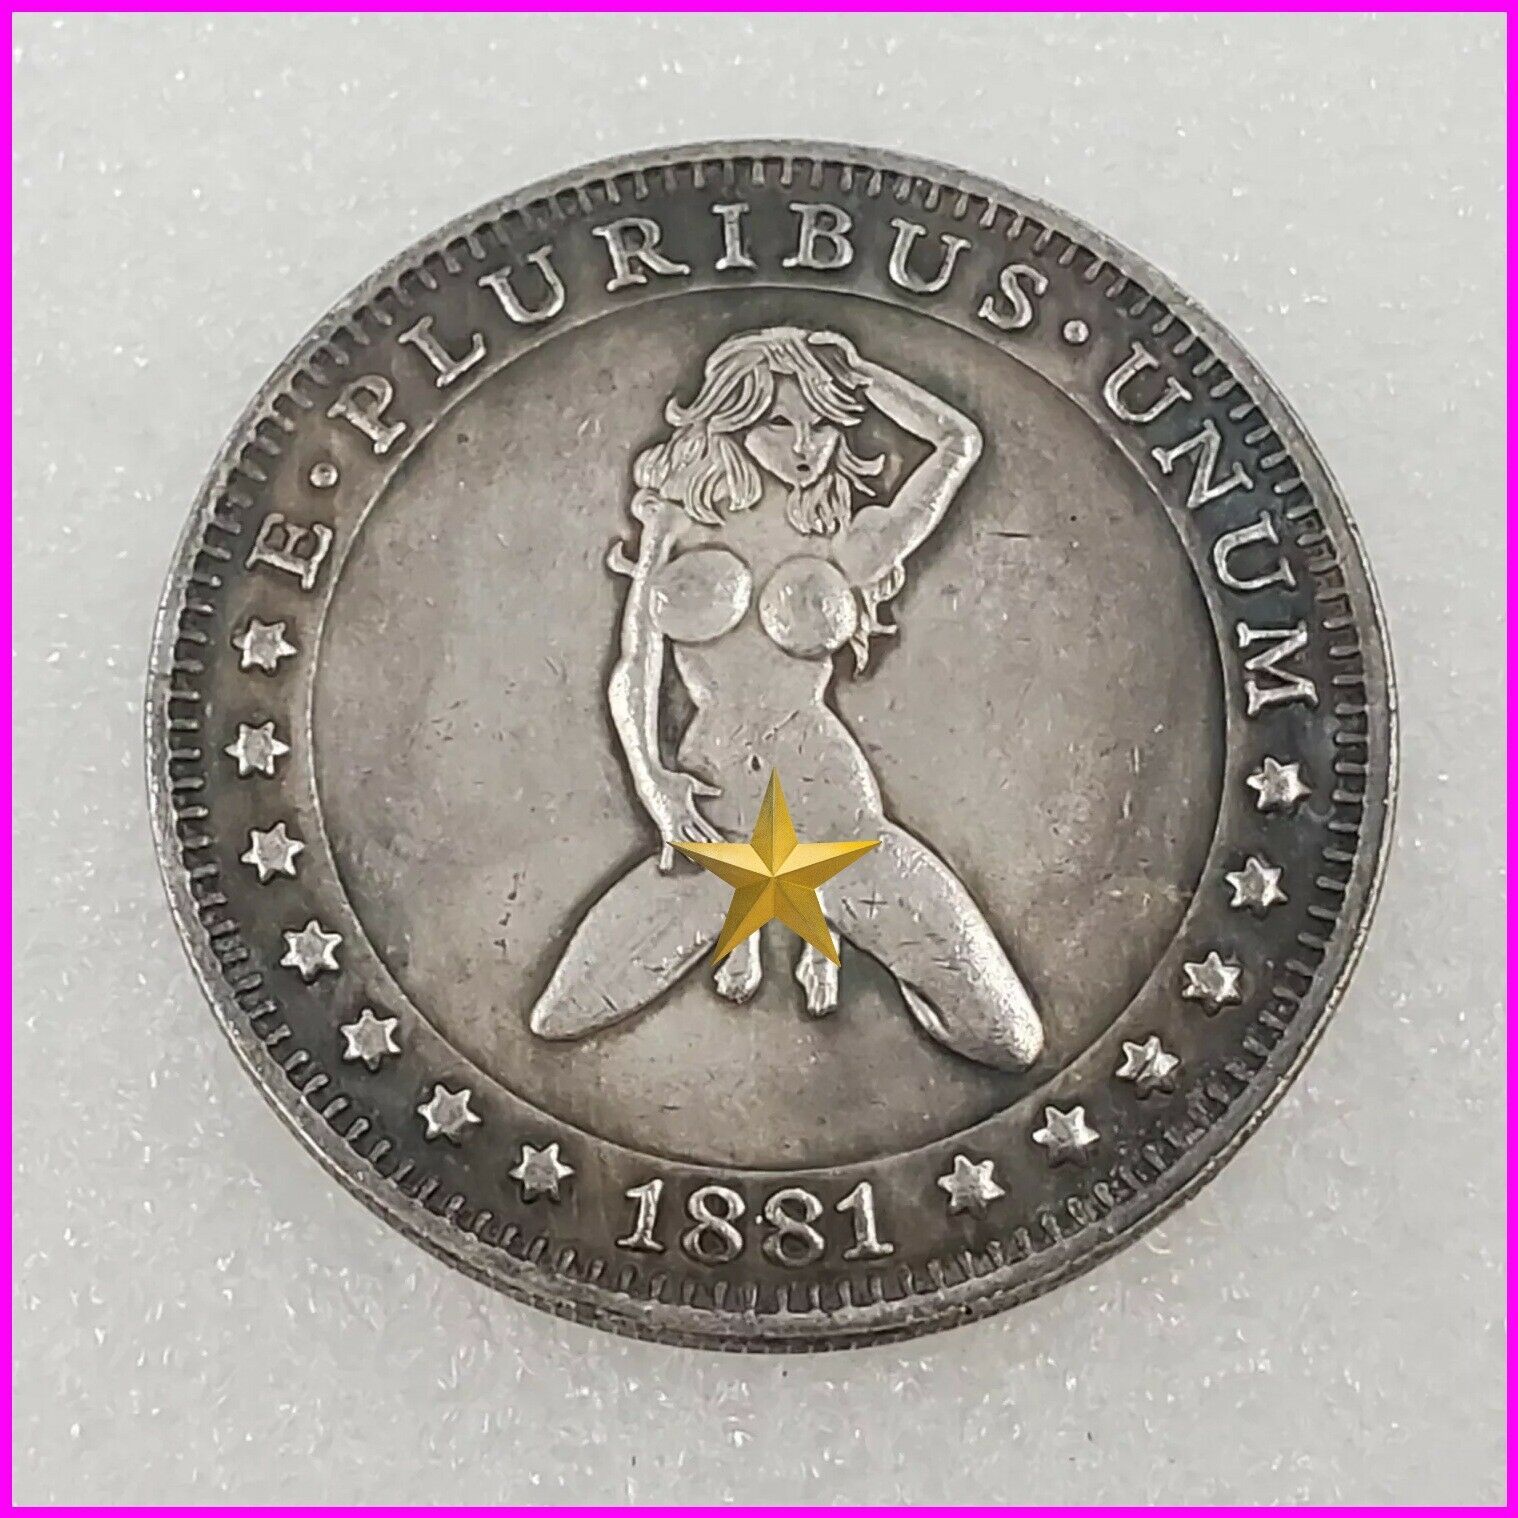 Sexy Girl Hobo Nickel Coin 1881 Commemorative Free Shipping 108 Hobo 6101